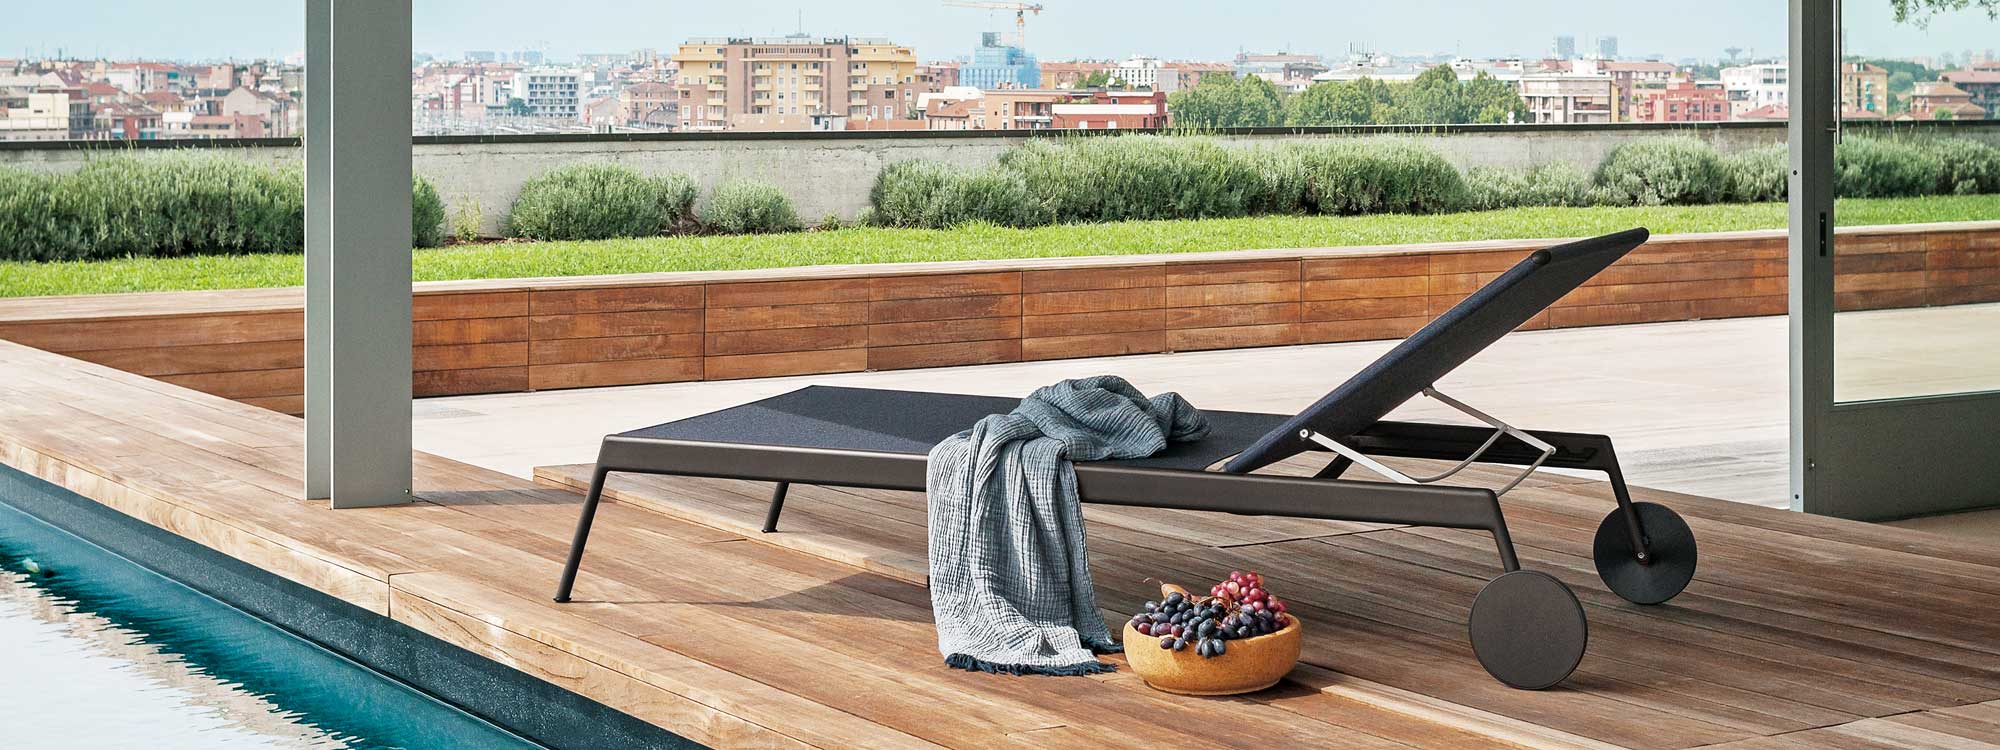 Image of grey RODA Piper adjustable sun lounger on rooftop terrace overlooking Italian city skyline